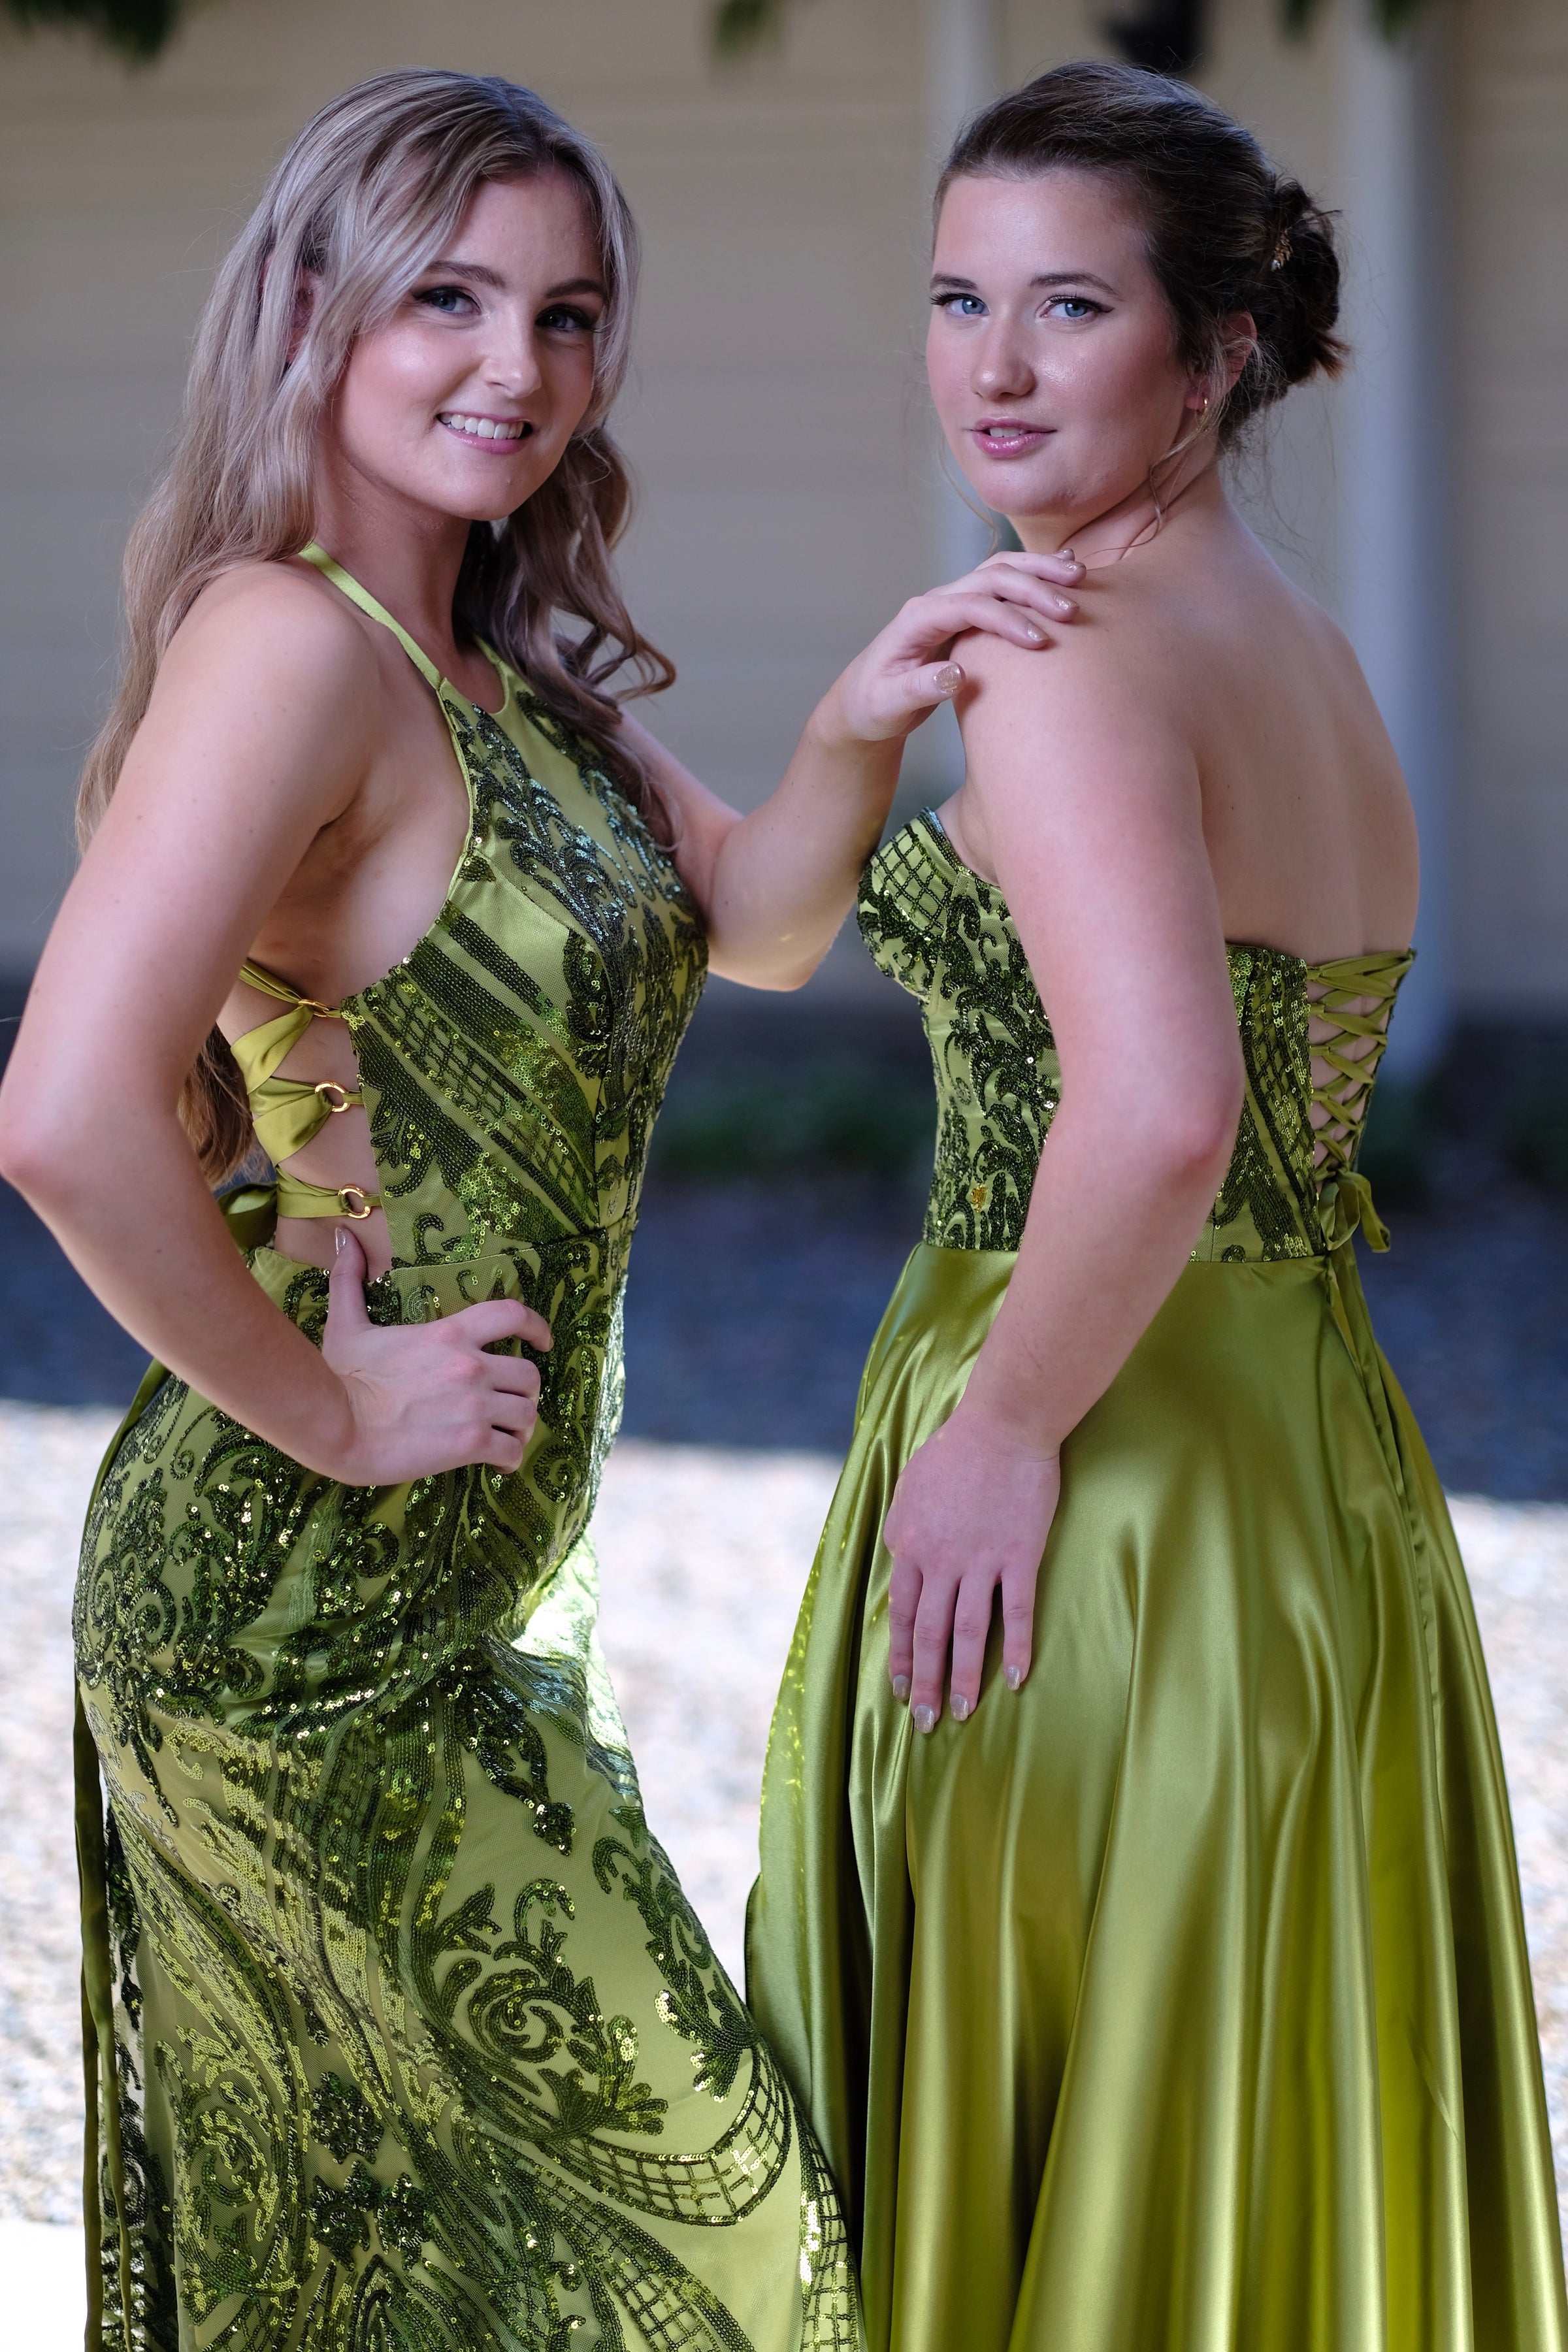 Jupiter Peridot Formal Dress -Bridesmaids & Formal - bridesmaids -formal -green- Melanie Jayne